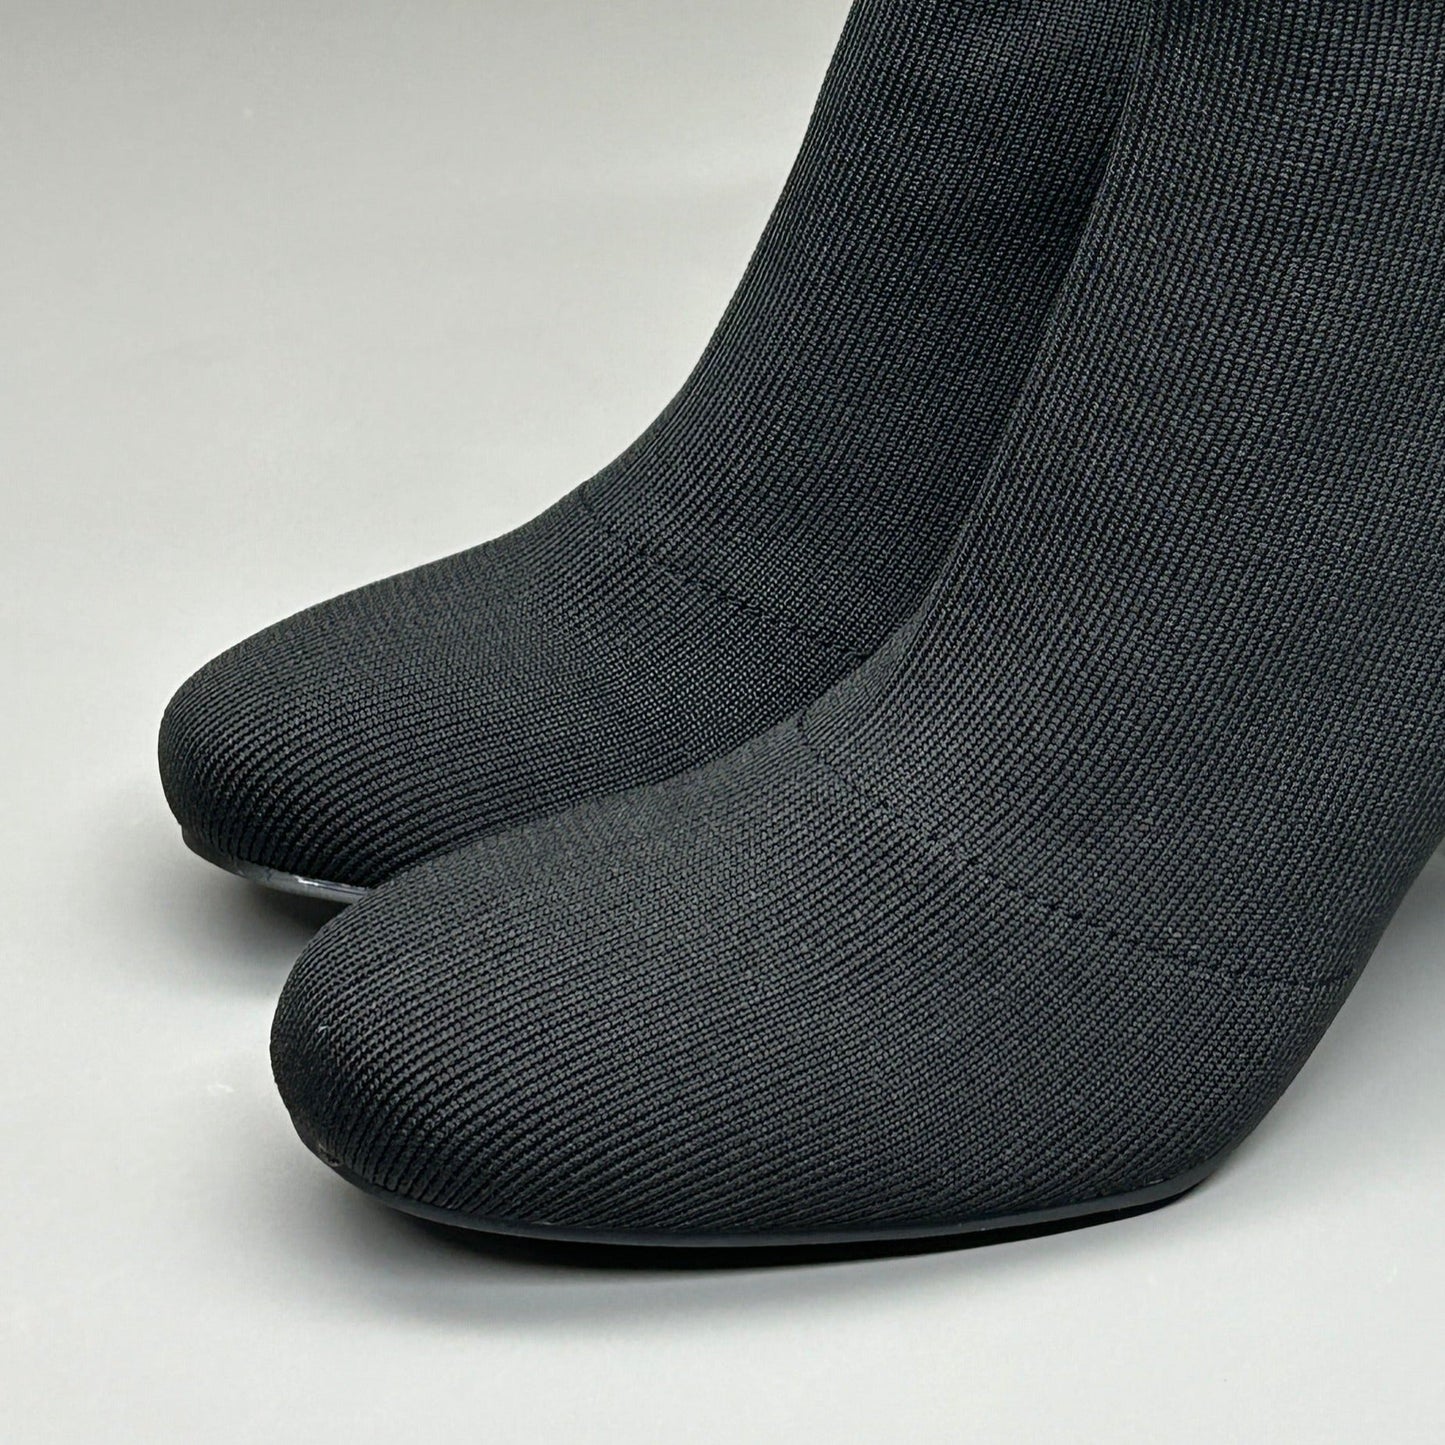 MIA Erika Fly Knit Booties Dress Boots Black 2” Heel Sz 12 GS7553115Y (New)